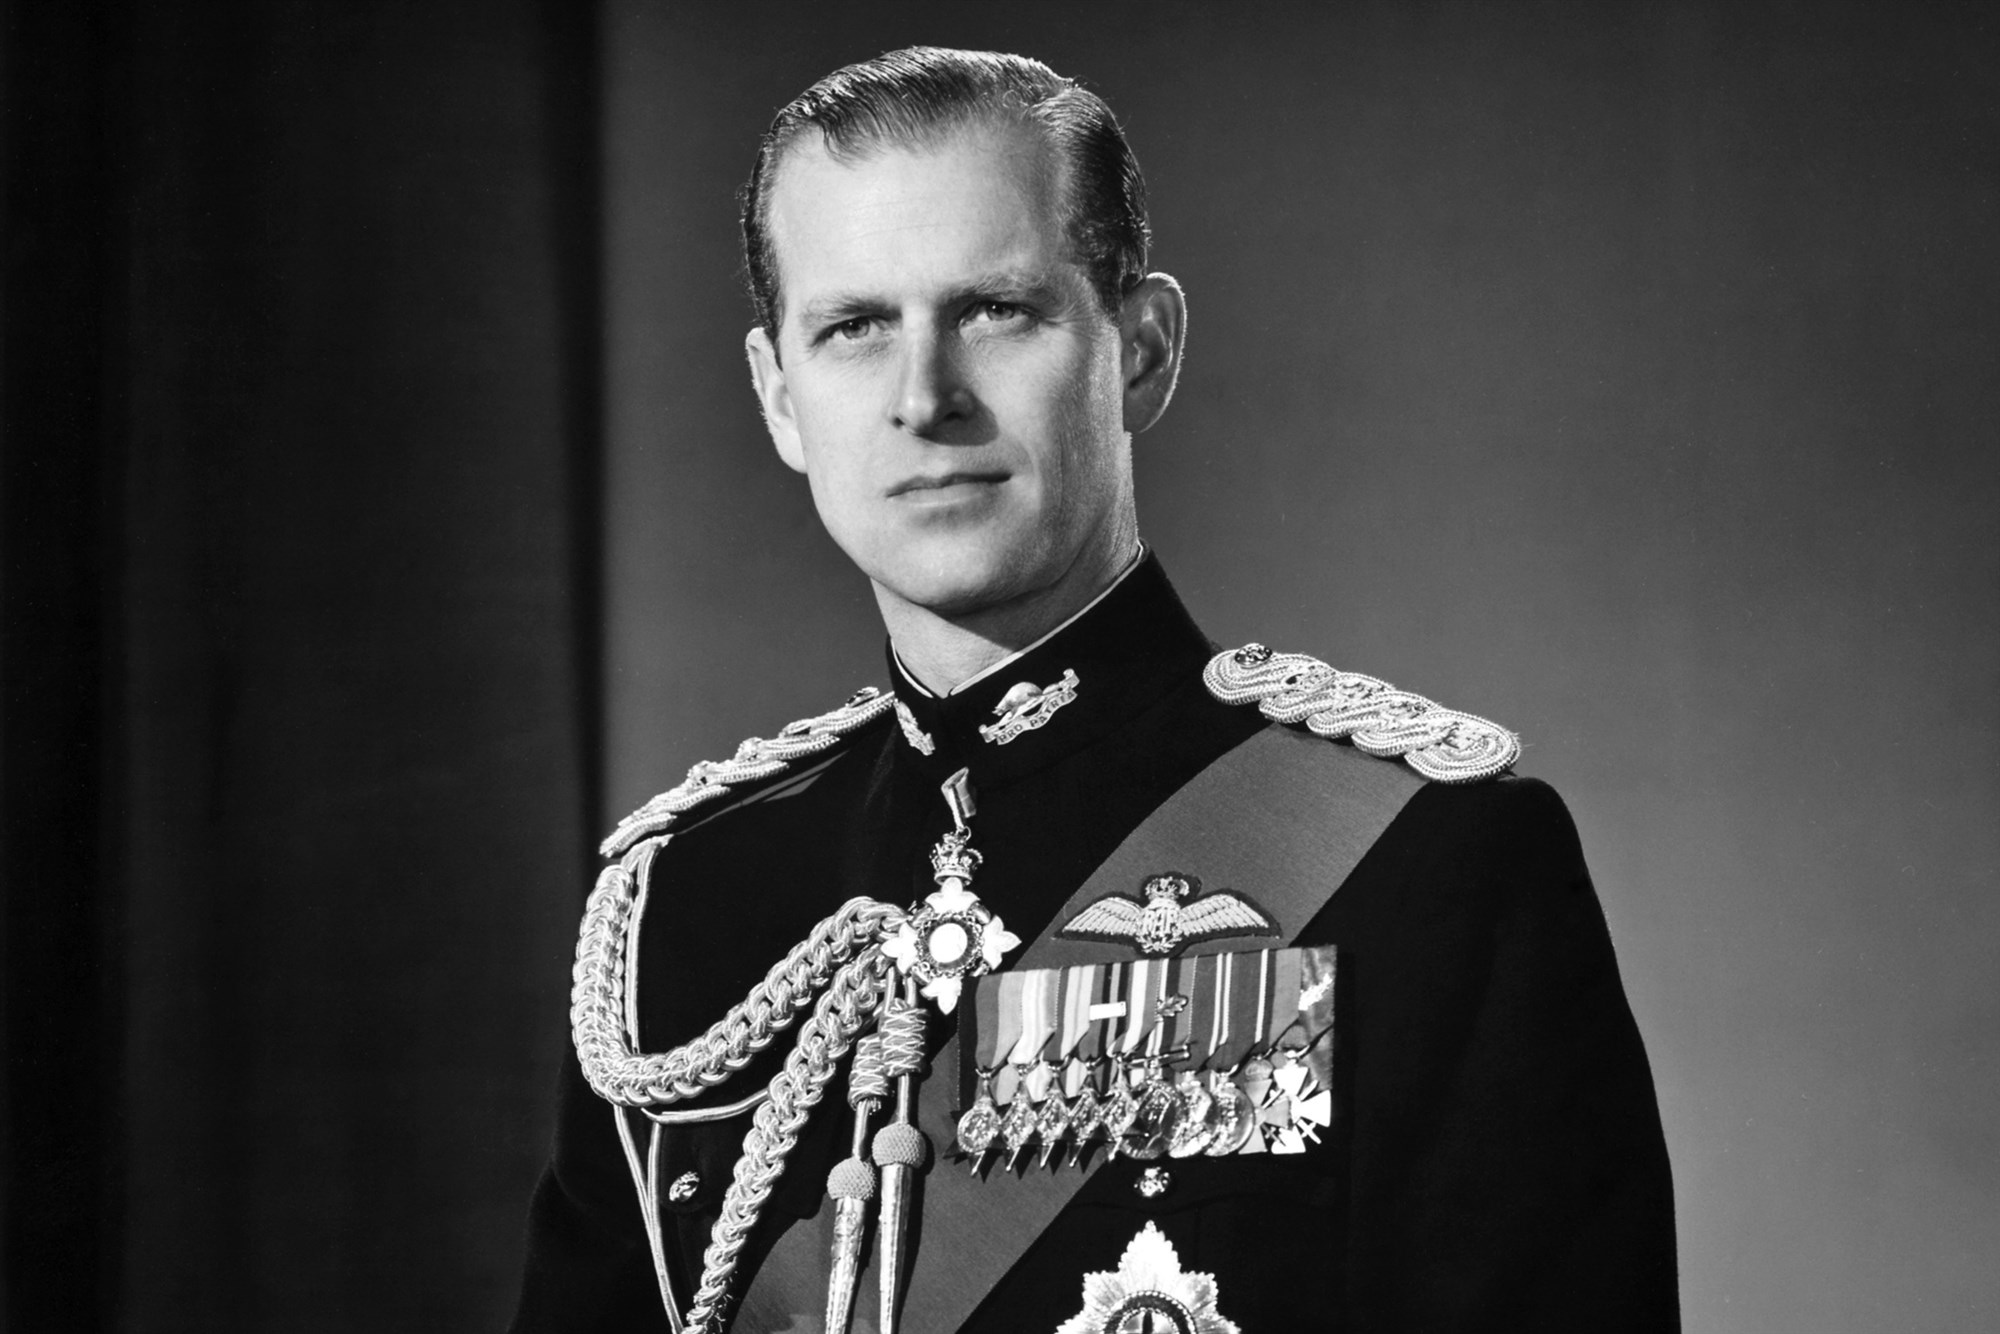 Prince Philip, Husband Of Britain's Queen Elizabeth II, Dies At 99